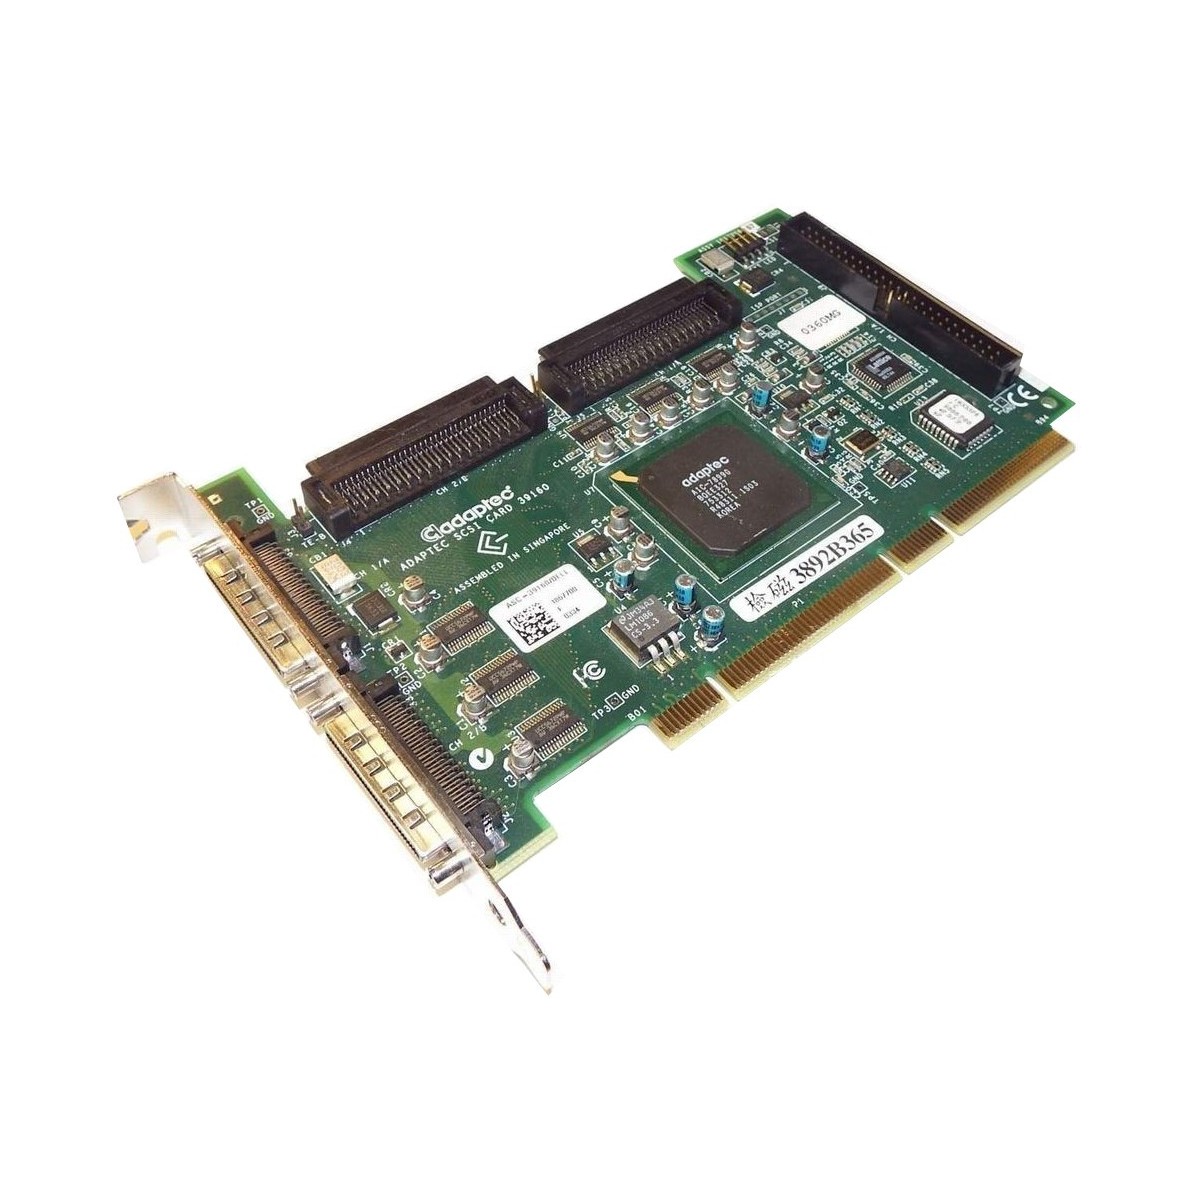 KONTROLER DELL SCSI 39160 U160 PCI-x 0R5601